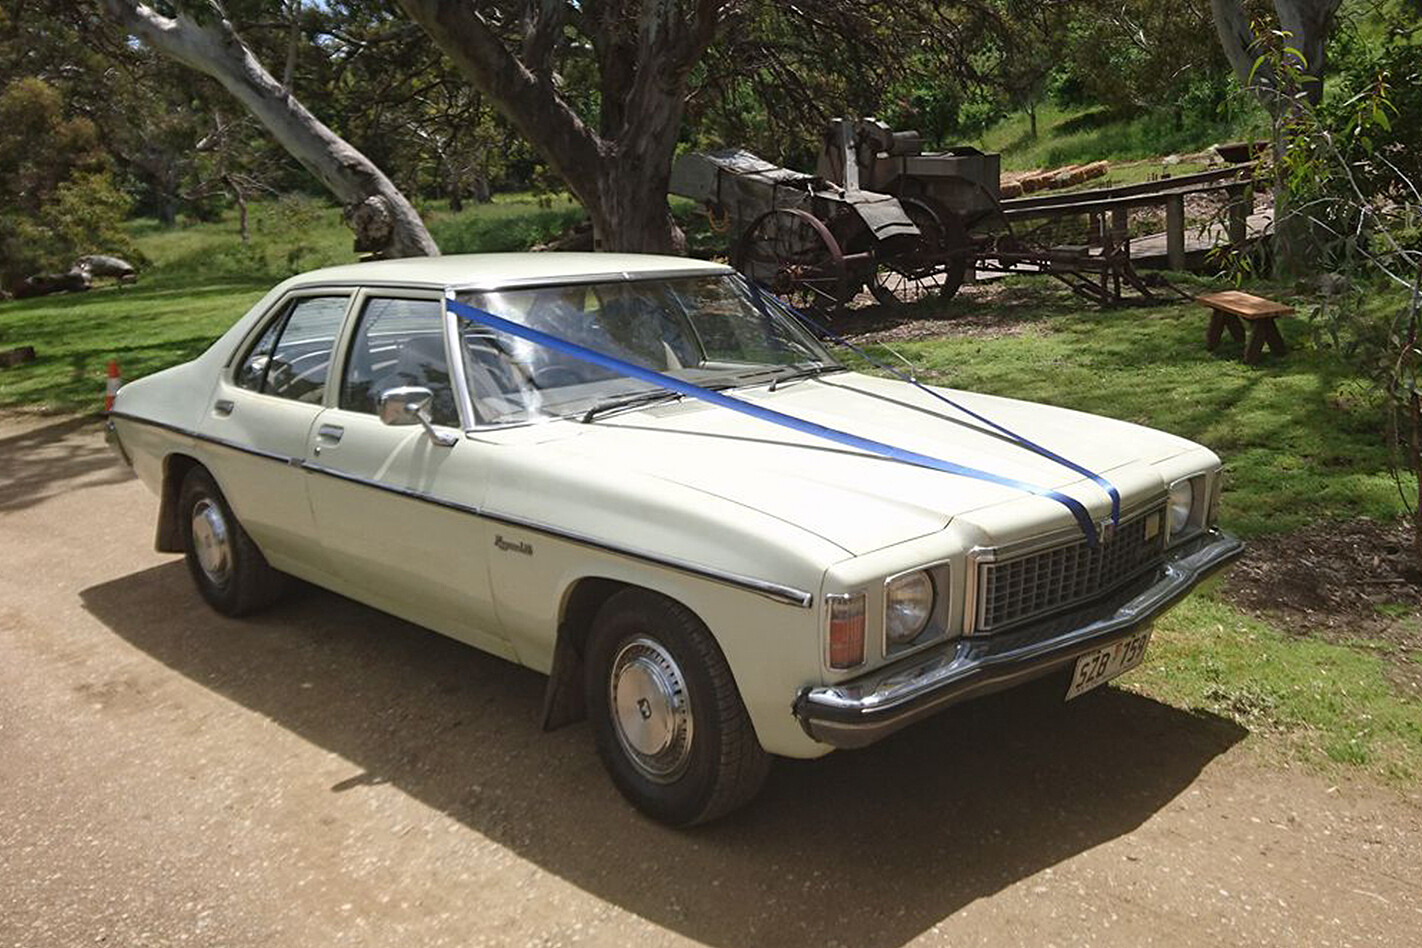 Paul Smith's Holden Kingswood wedding car